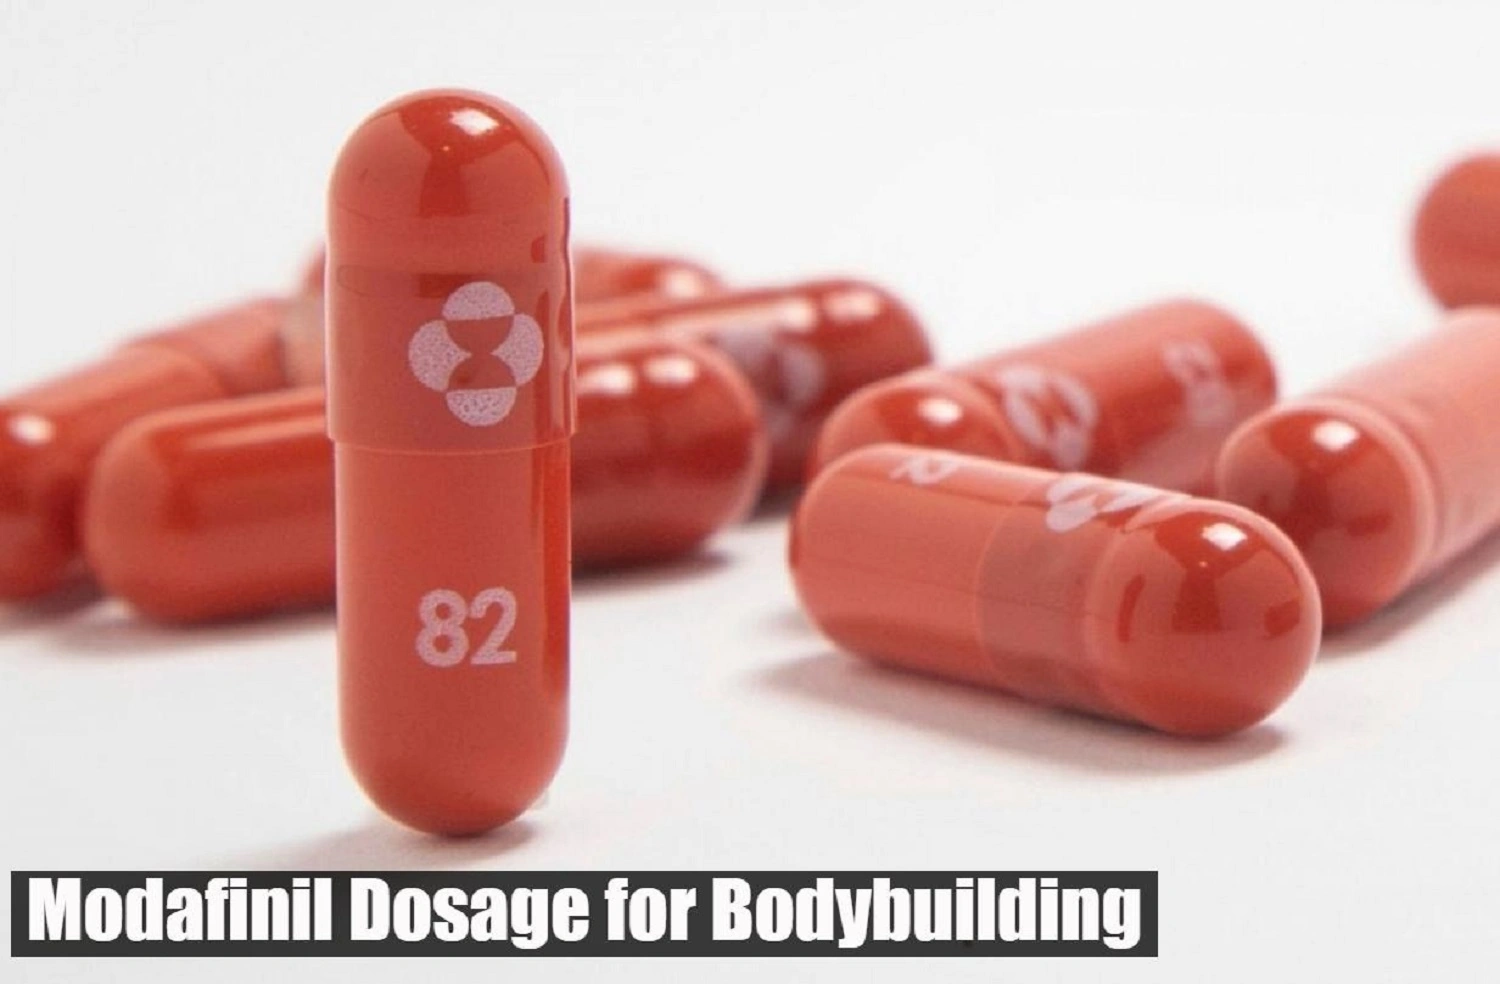 Modafinil Dosage for Bodybuilding